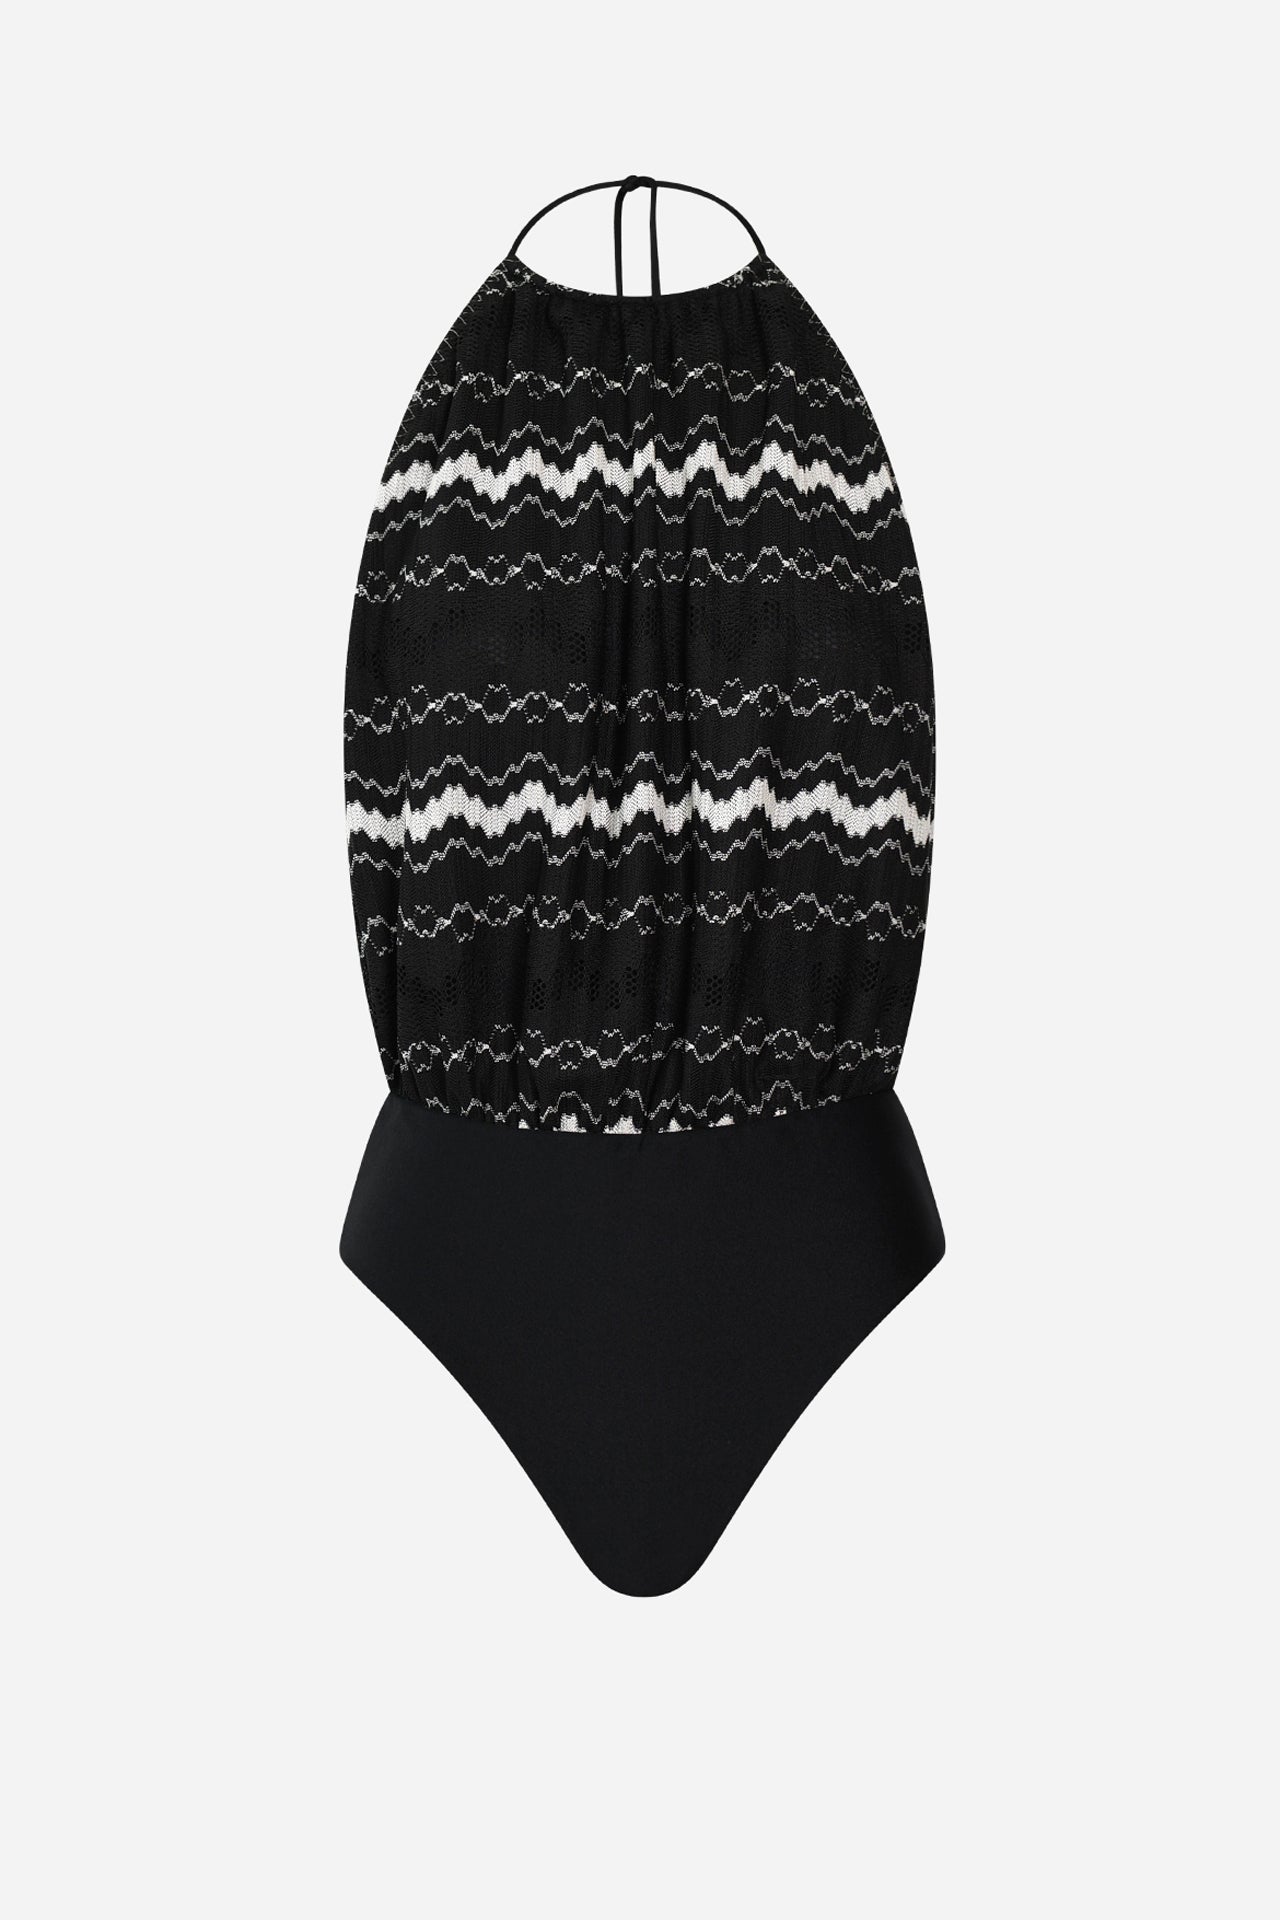 HANNE BLOCH - Black White Knit Halter-Neck Swimsuit